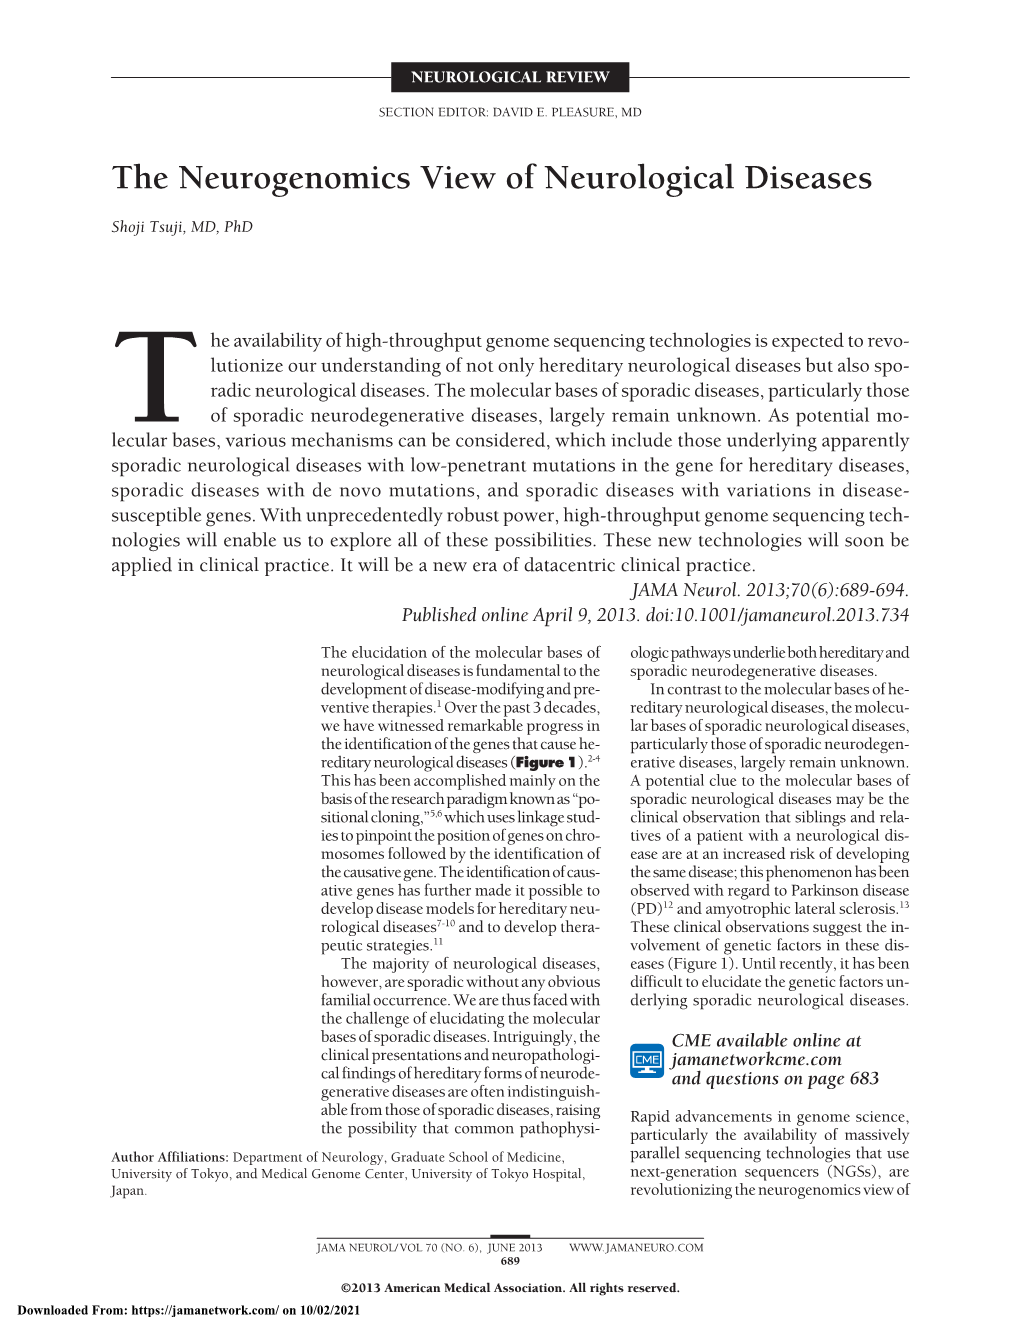 The Neurogenomics View of Neurological Diseases